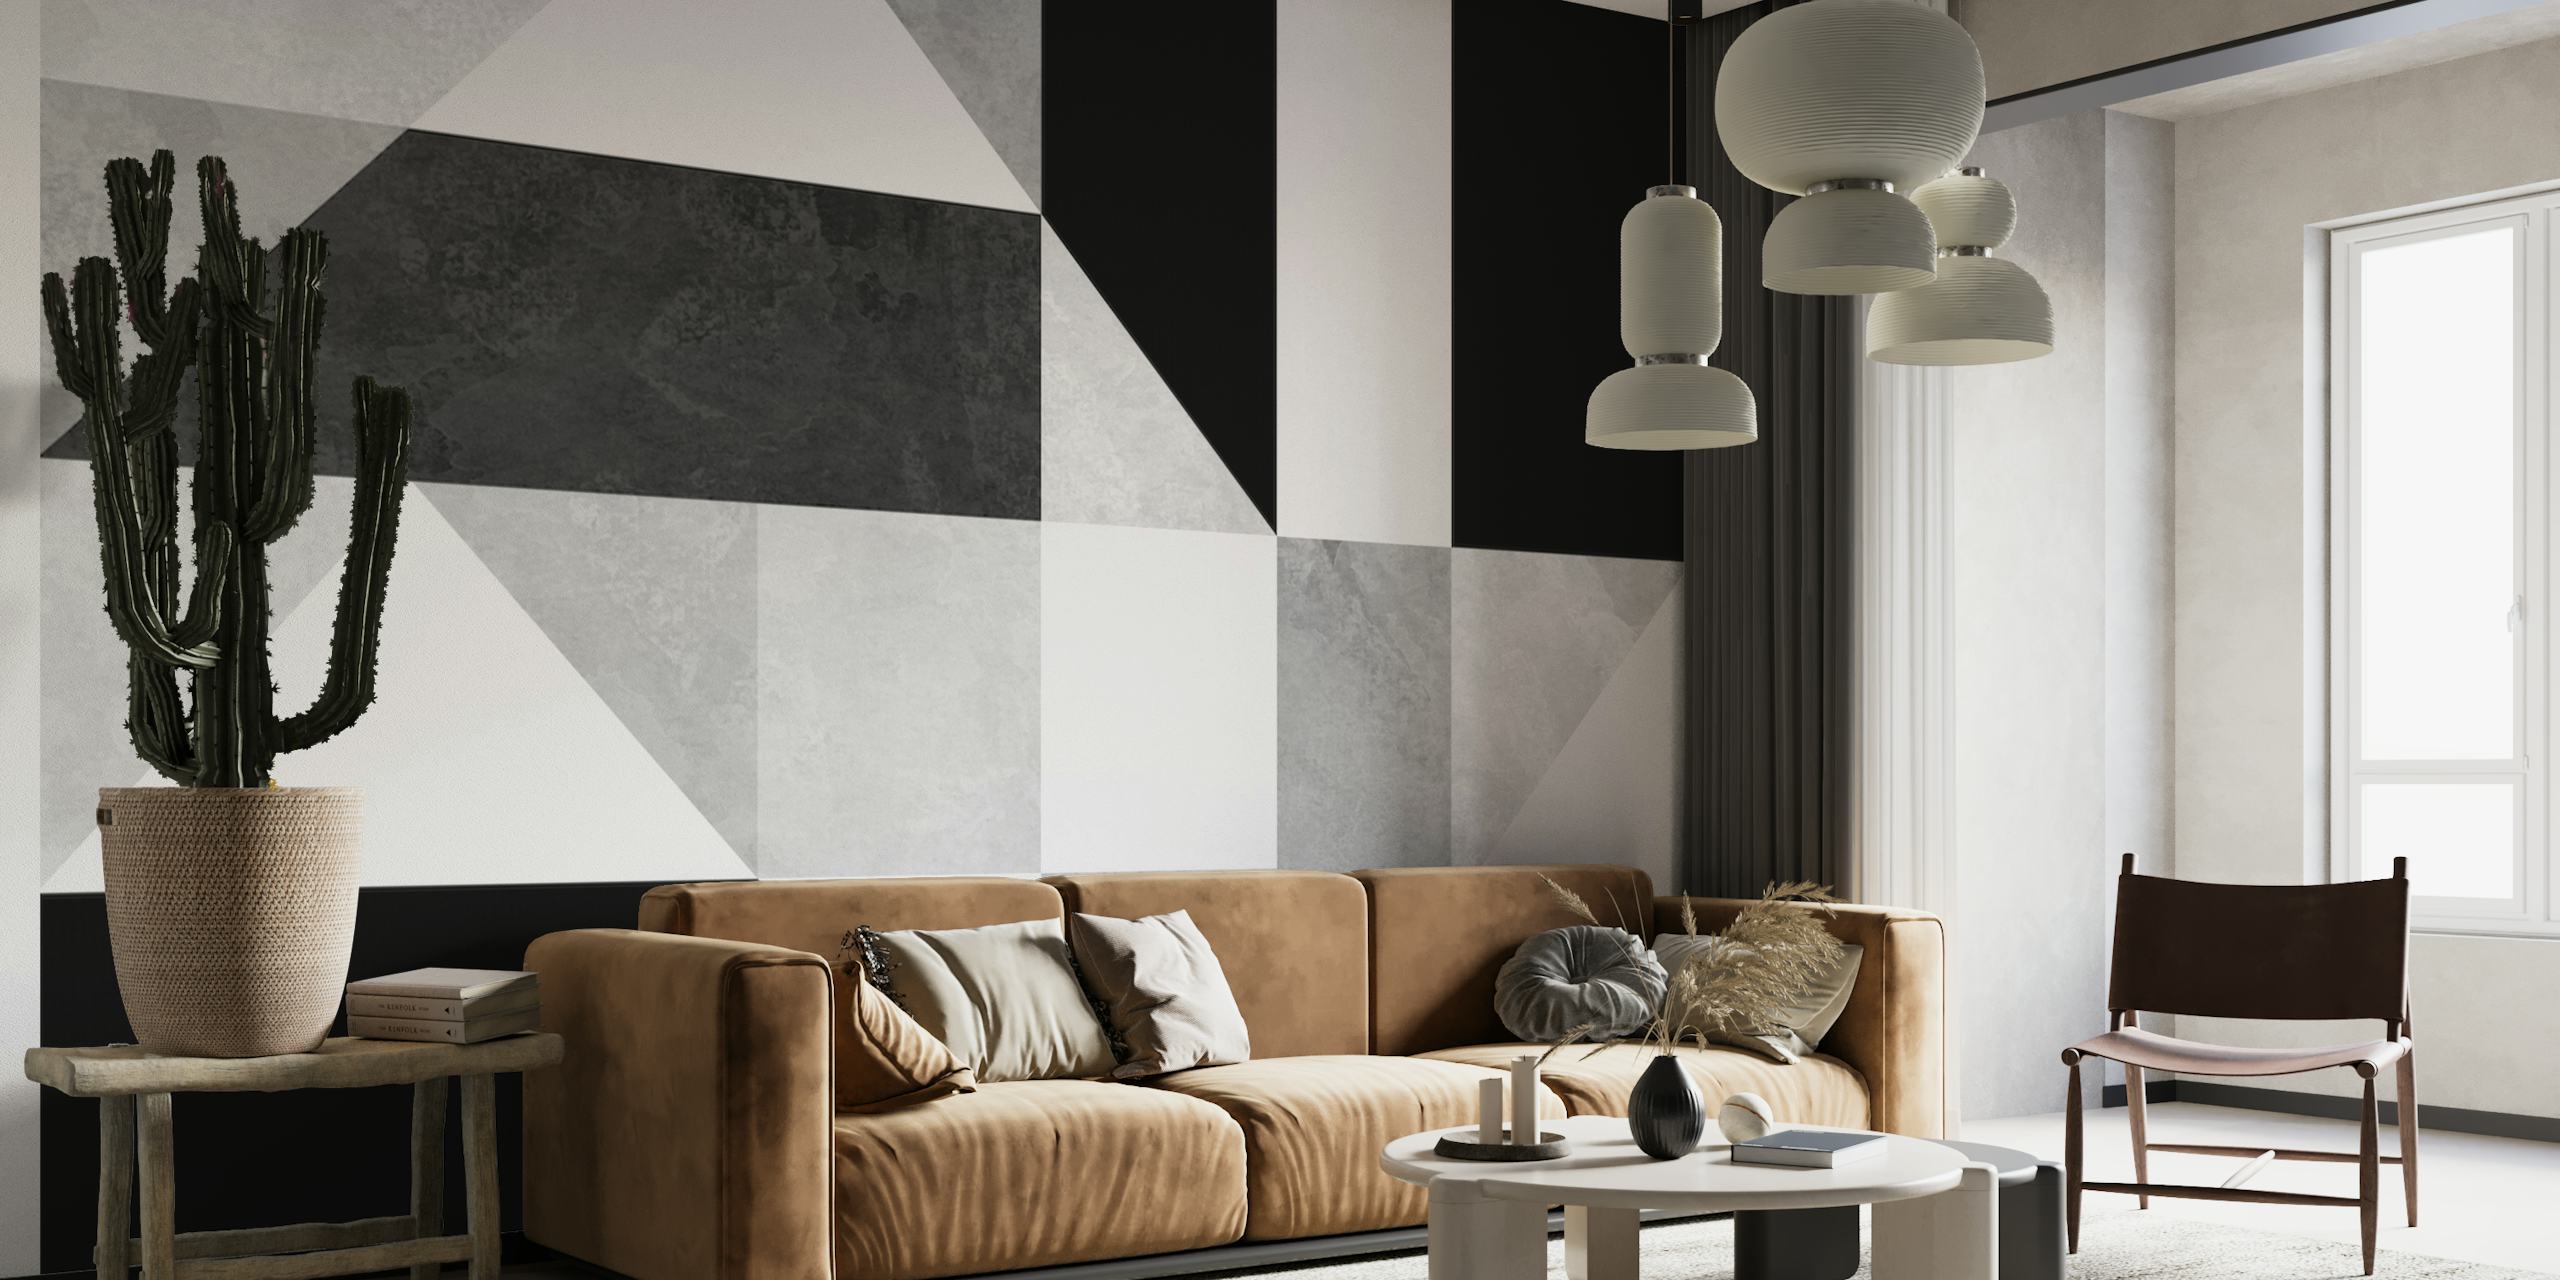 Black and white geometric pattern wall mural